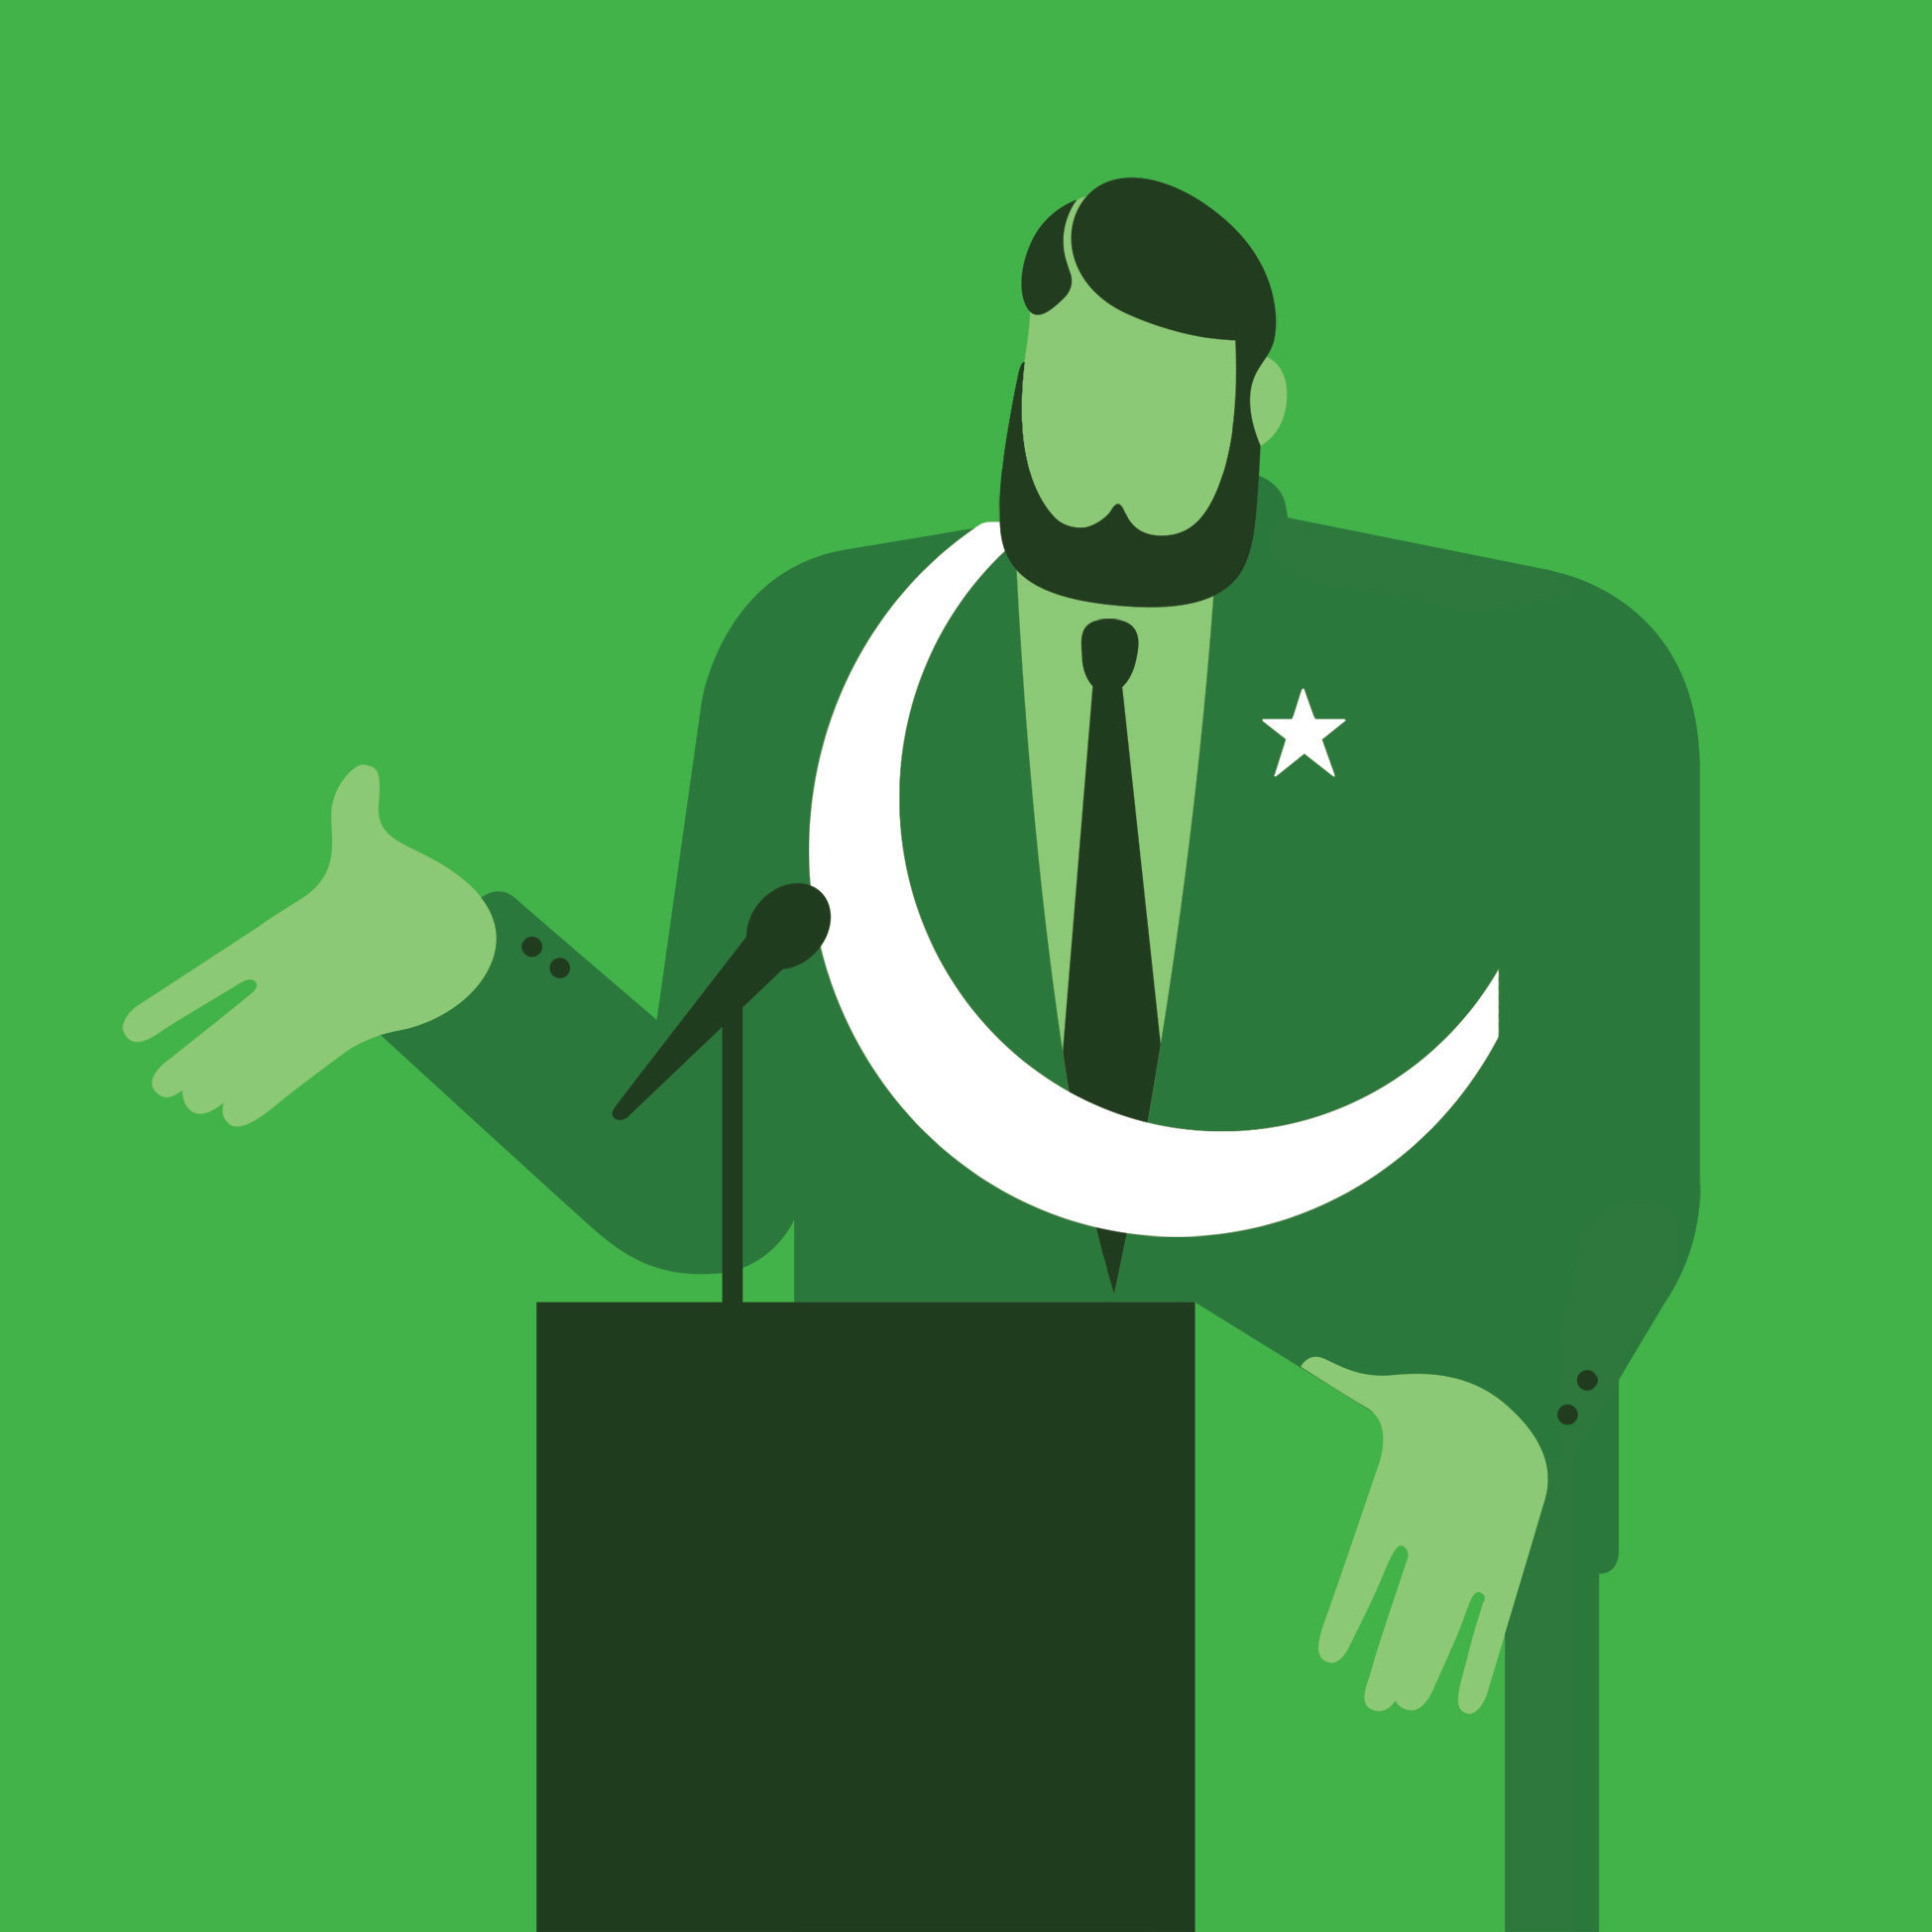 Islamic Politics - Understanding The Relationship Between Religion And Governance